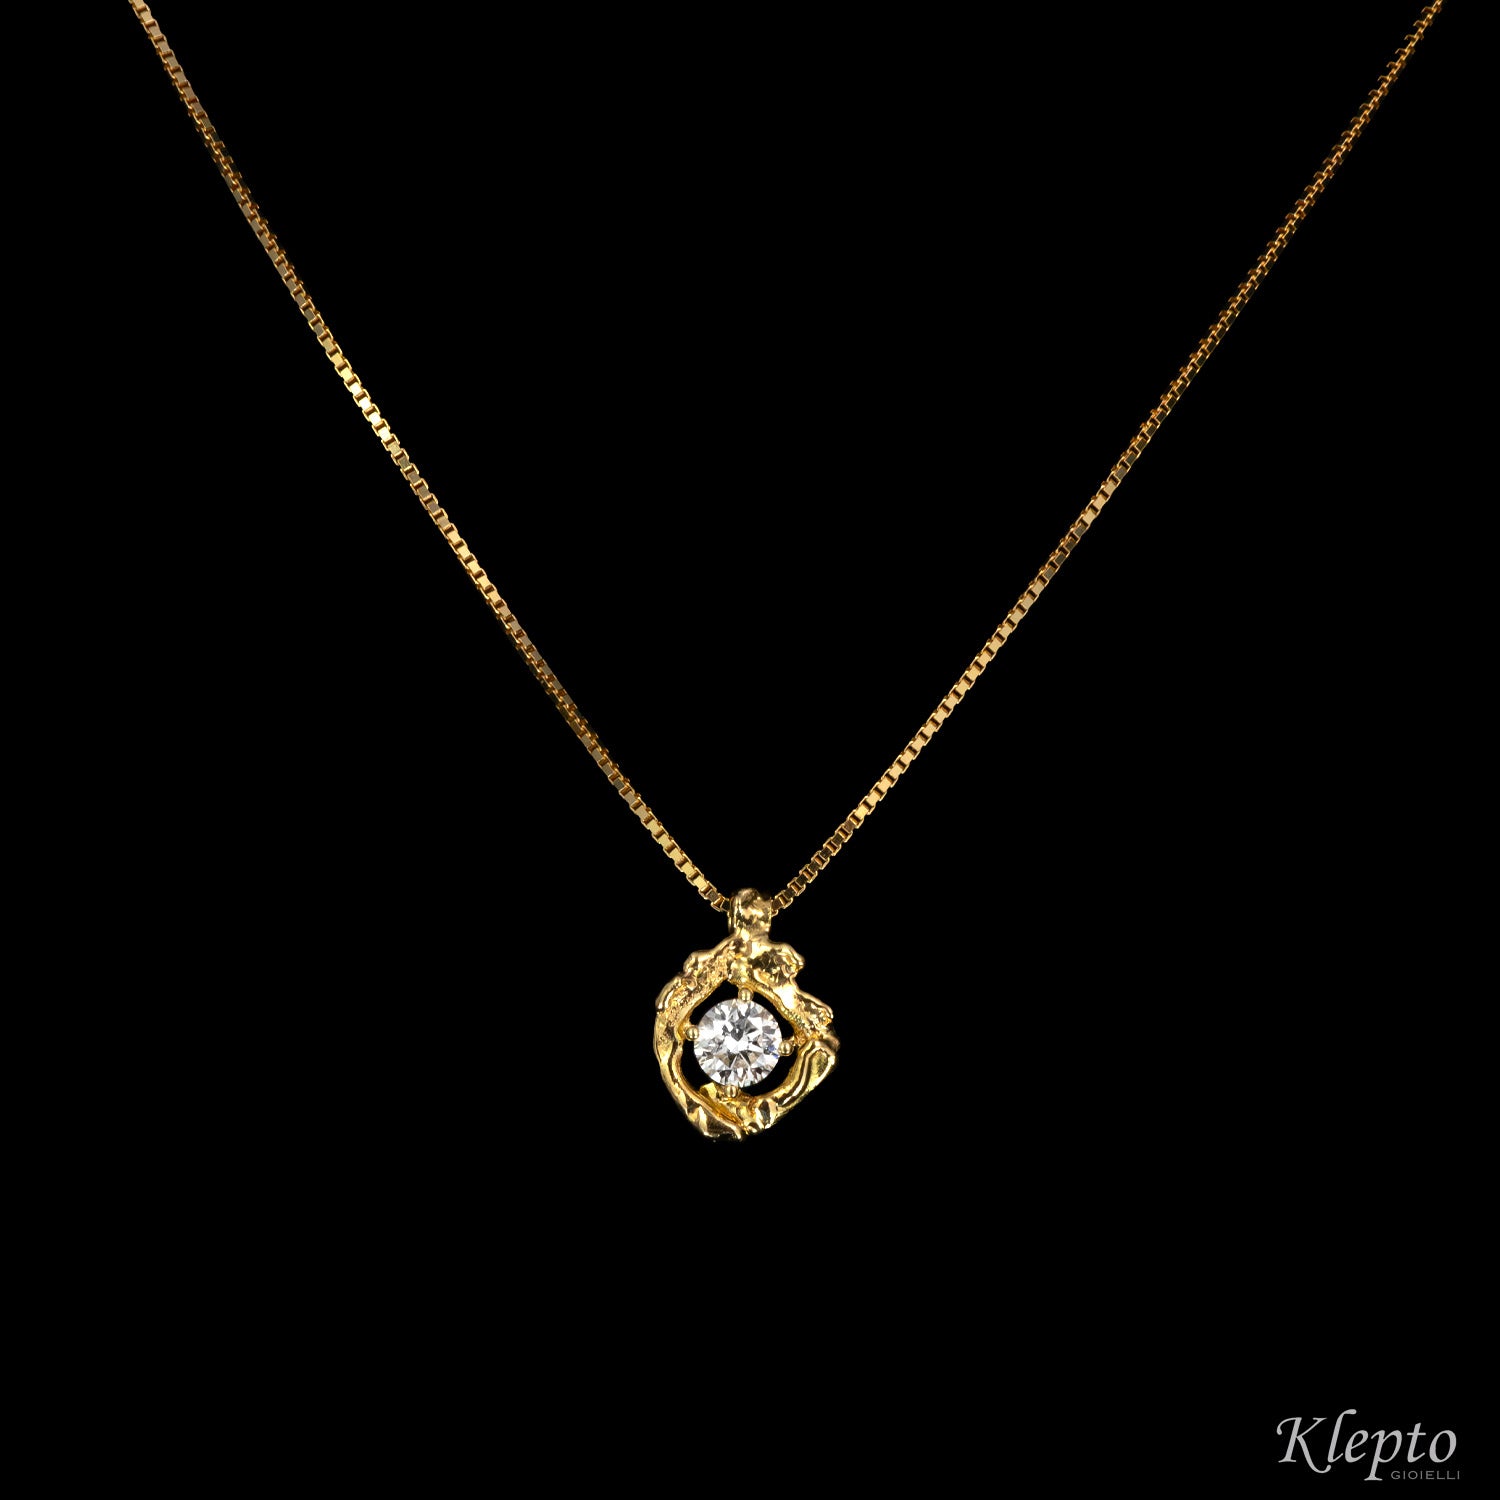 Pepita yellow gold pendant with diamond